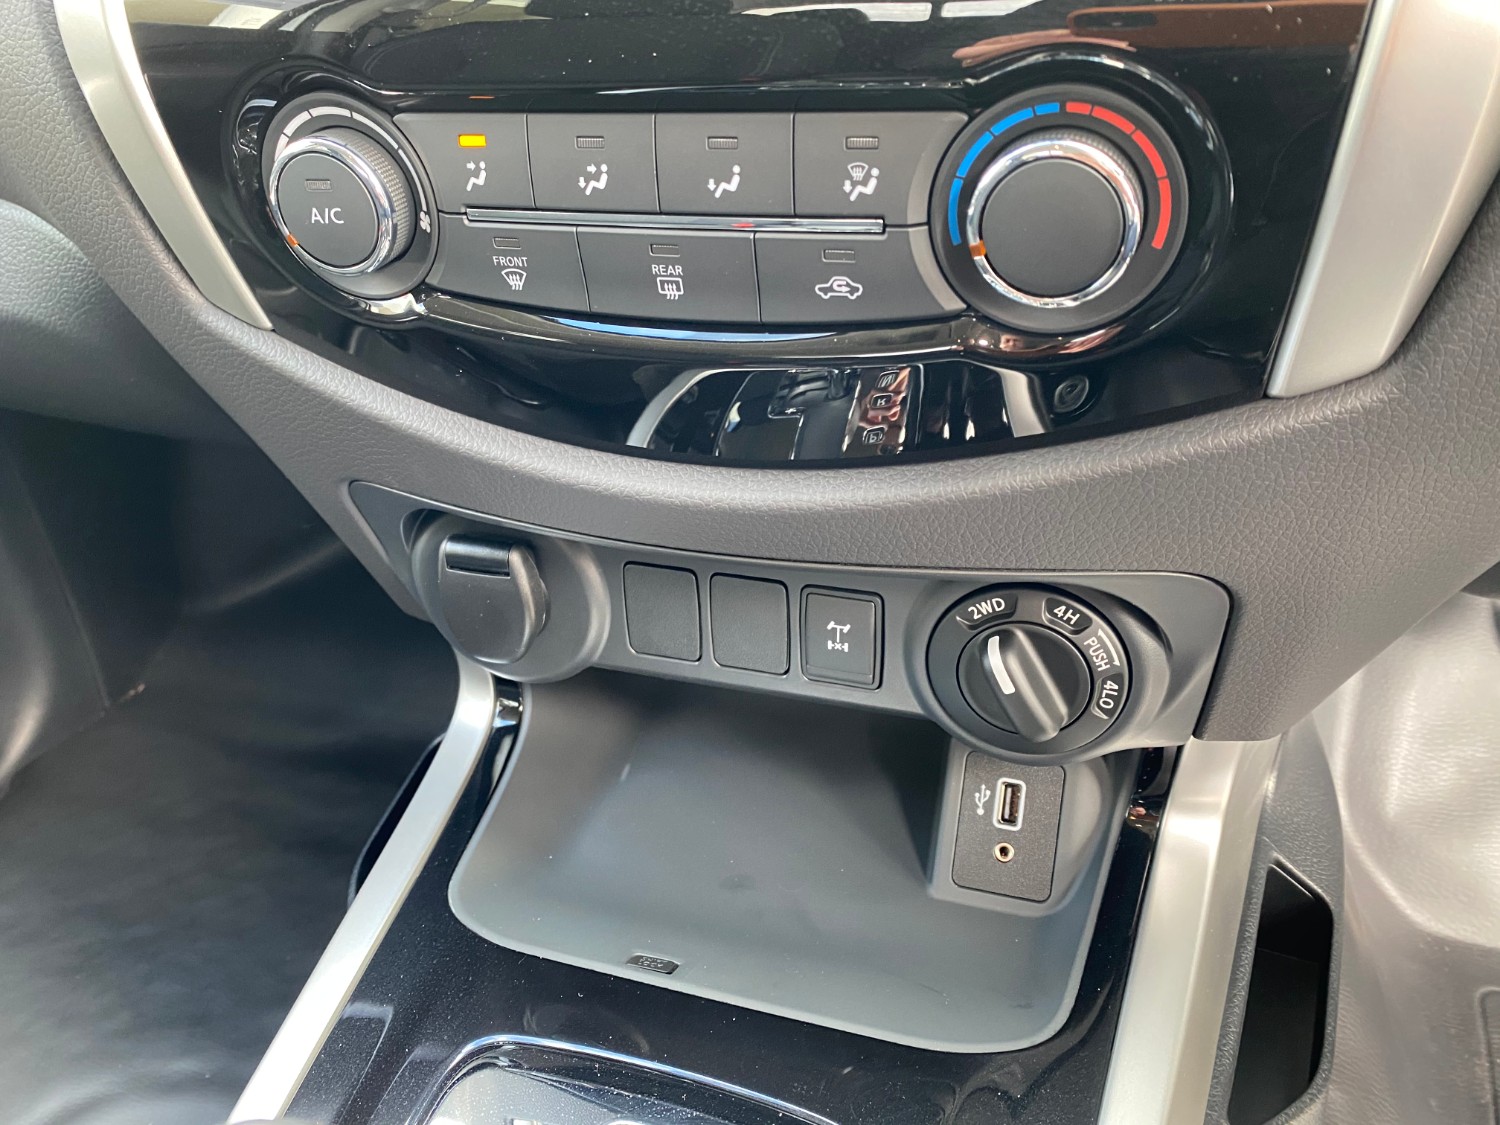 2019 MY20 Nissan Navara D23 Series 4 SL 4x4 Dual Cab Pickup Ute Image 31